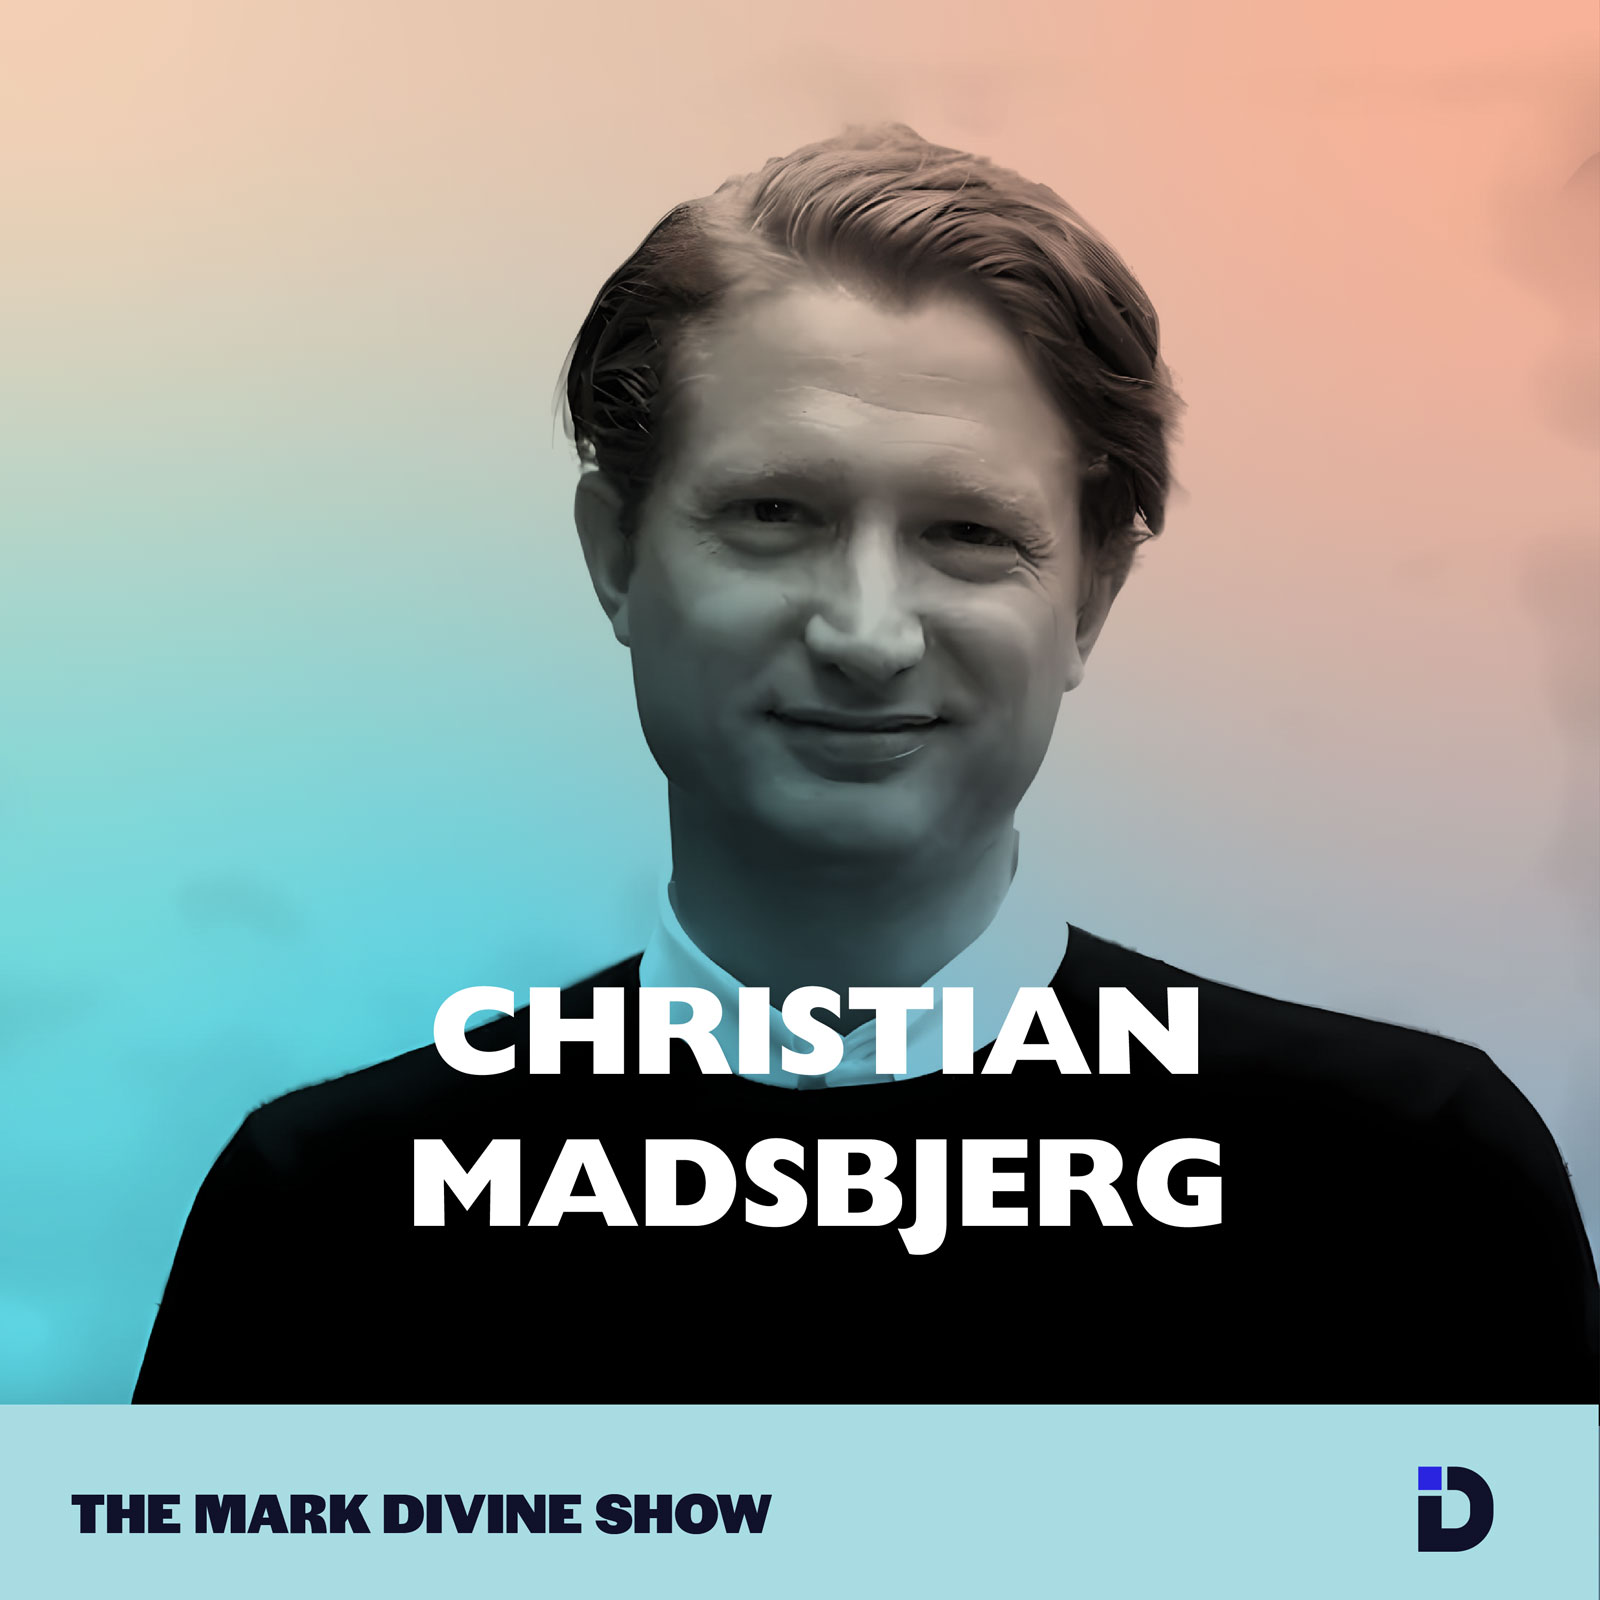 Christian Madsbjerg